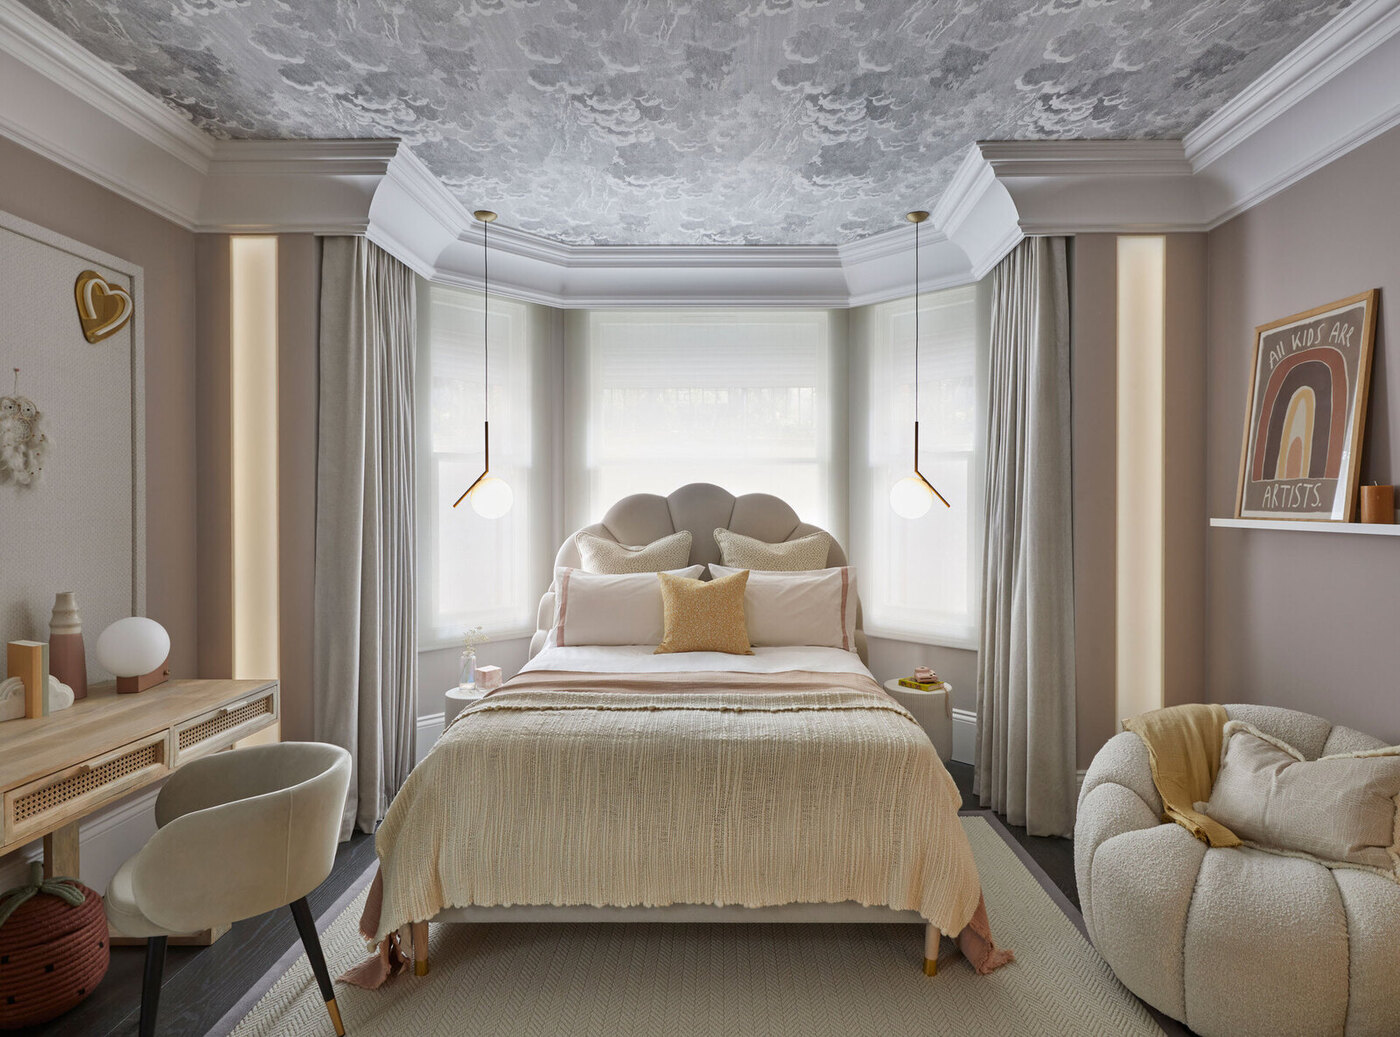 Bedroom Ceiling Ideas: 12 Designs For An Inspiring Sleep Space